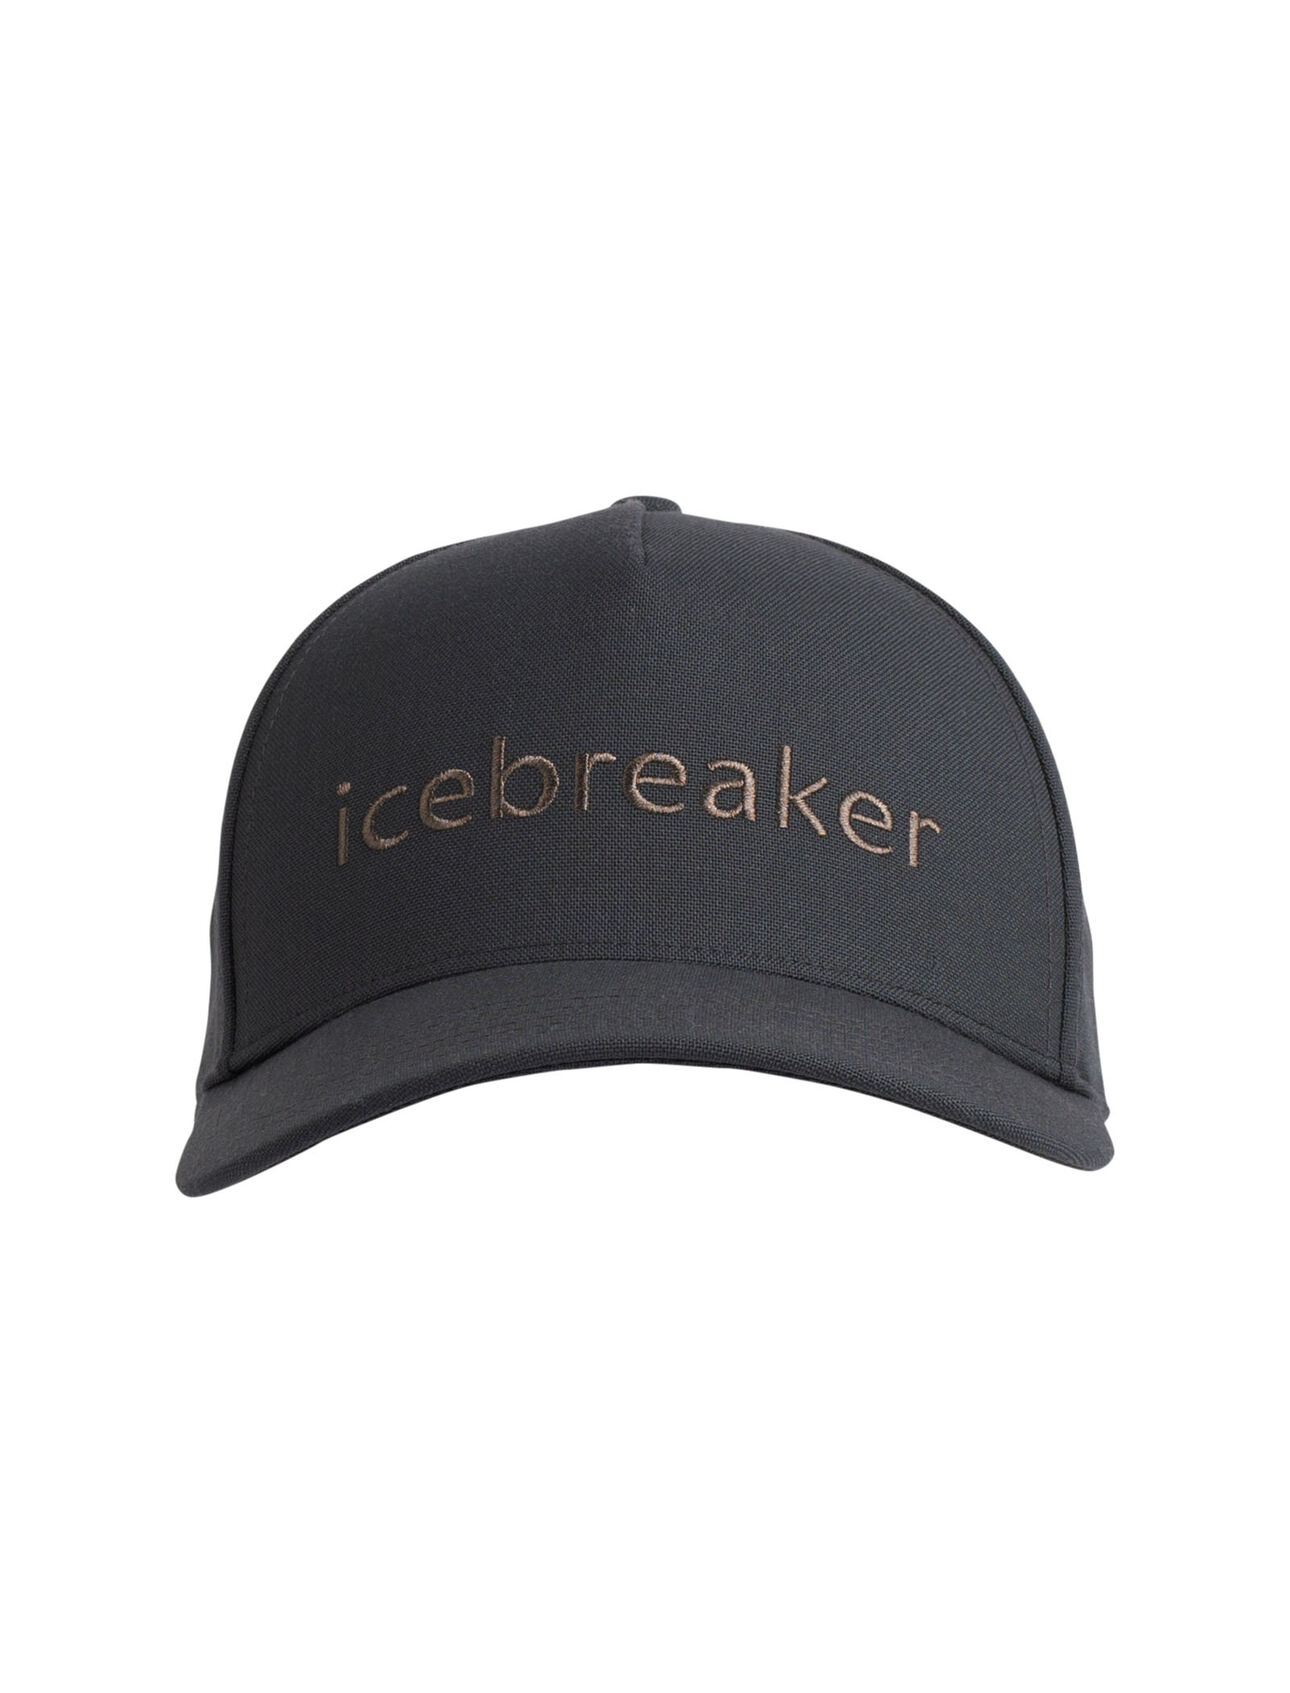 Cool-Lite™ icebreaker Logo pet